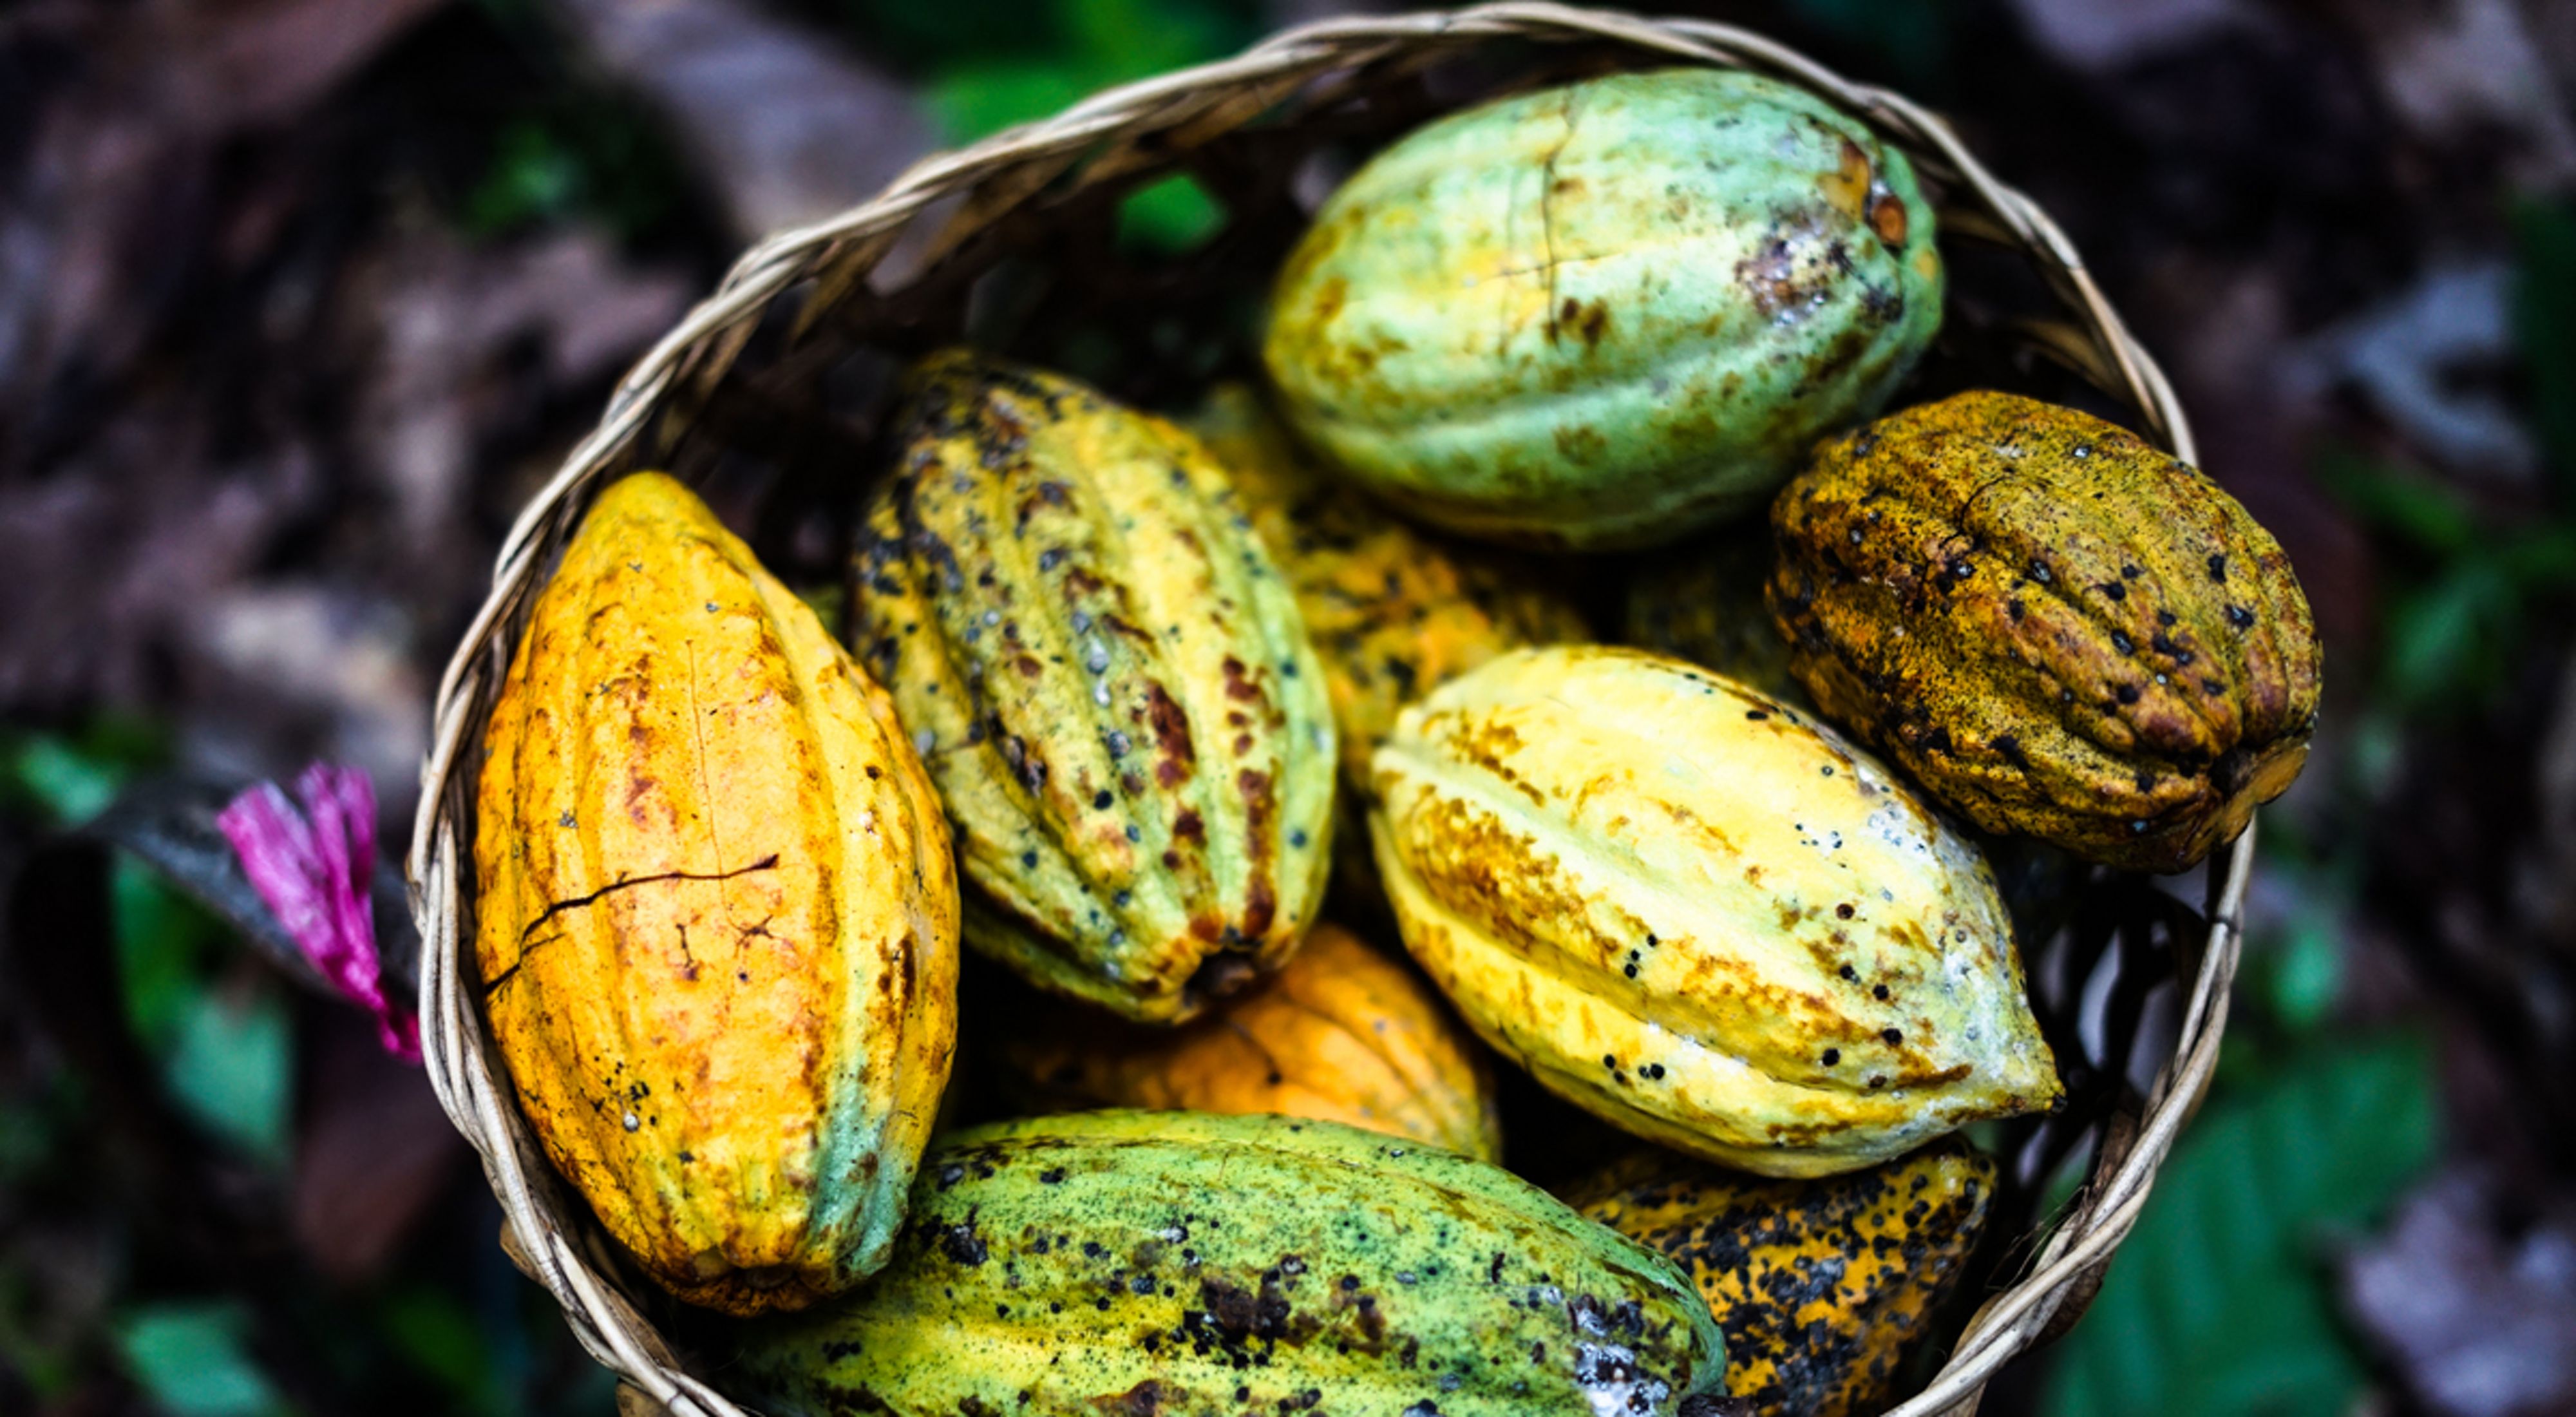 Borneo Cacao